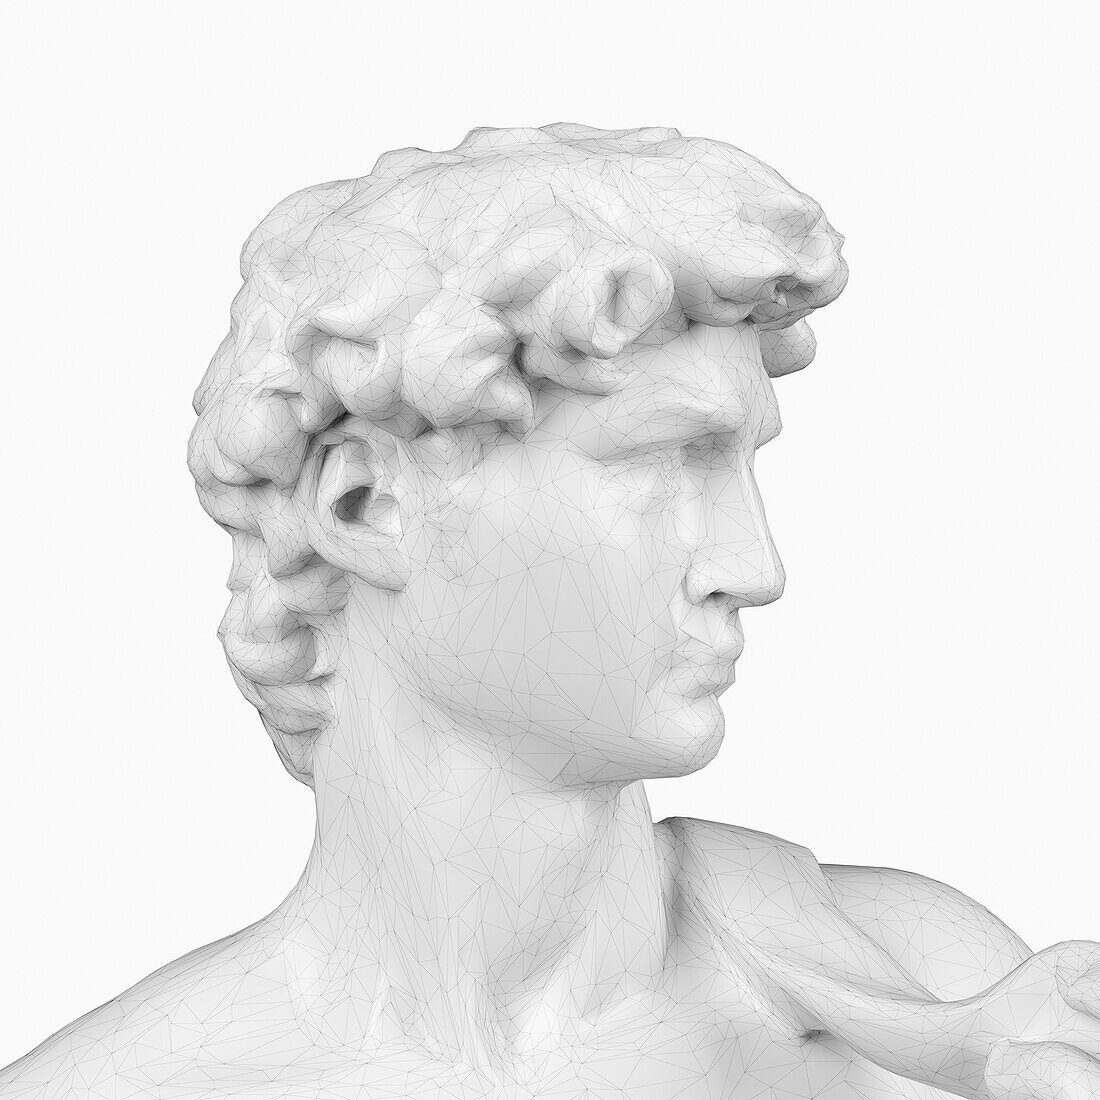 Wireframe David statue, illustration